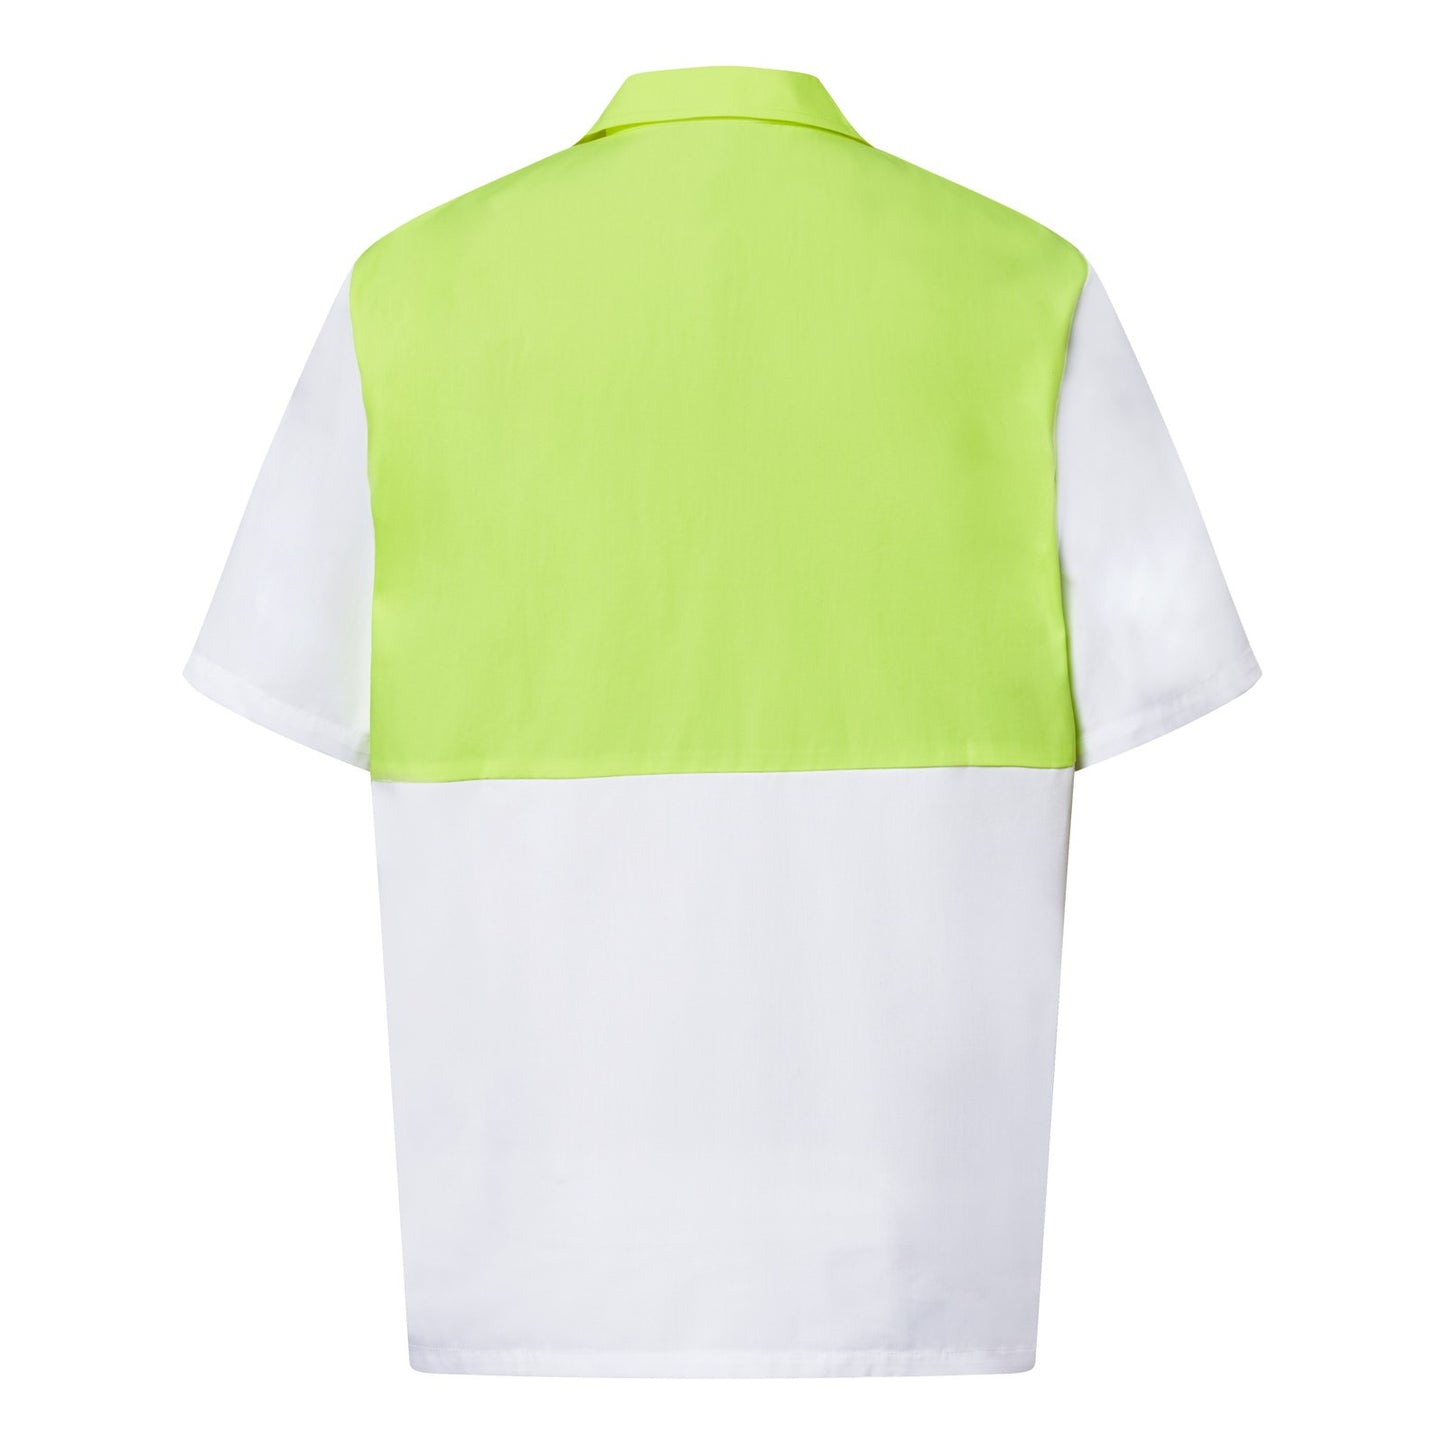 NCC - Jacket Shirt Modesty Insert S/S - WS6070